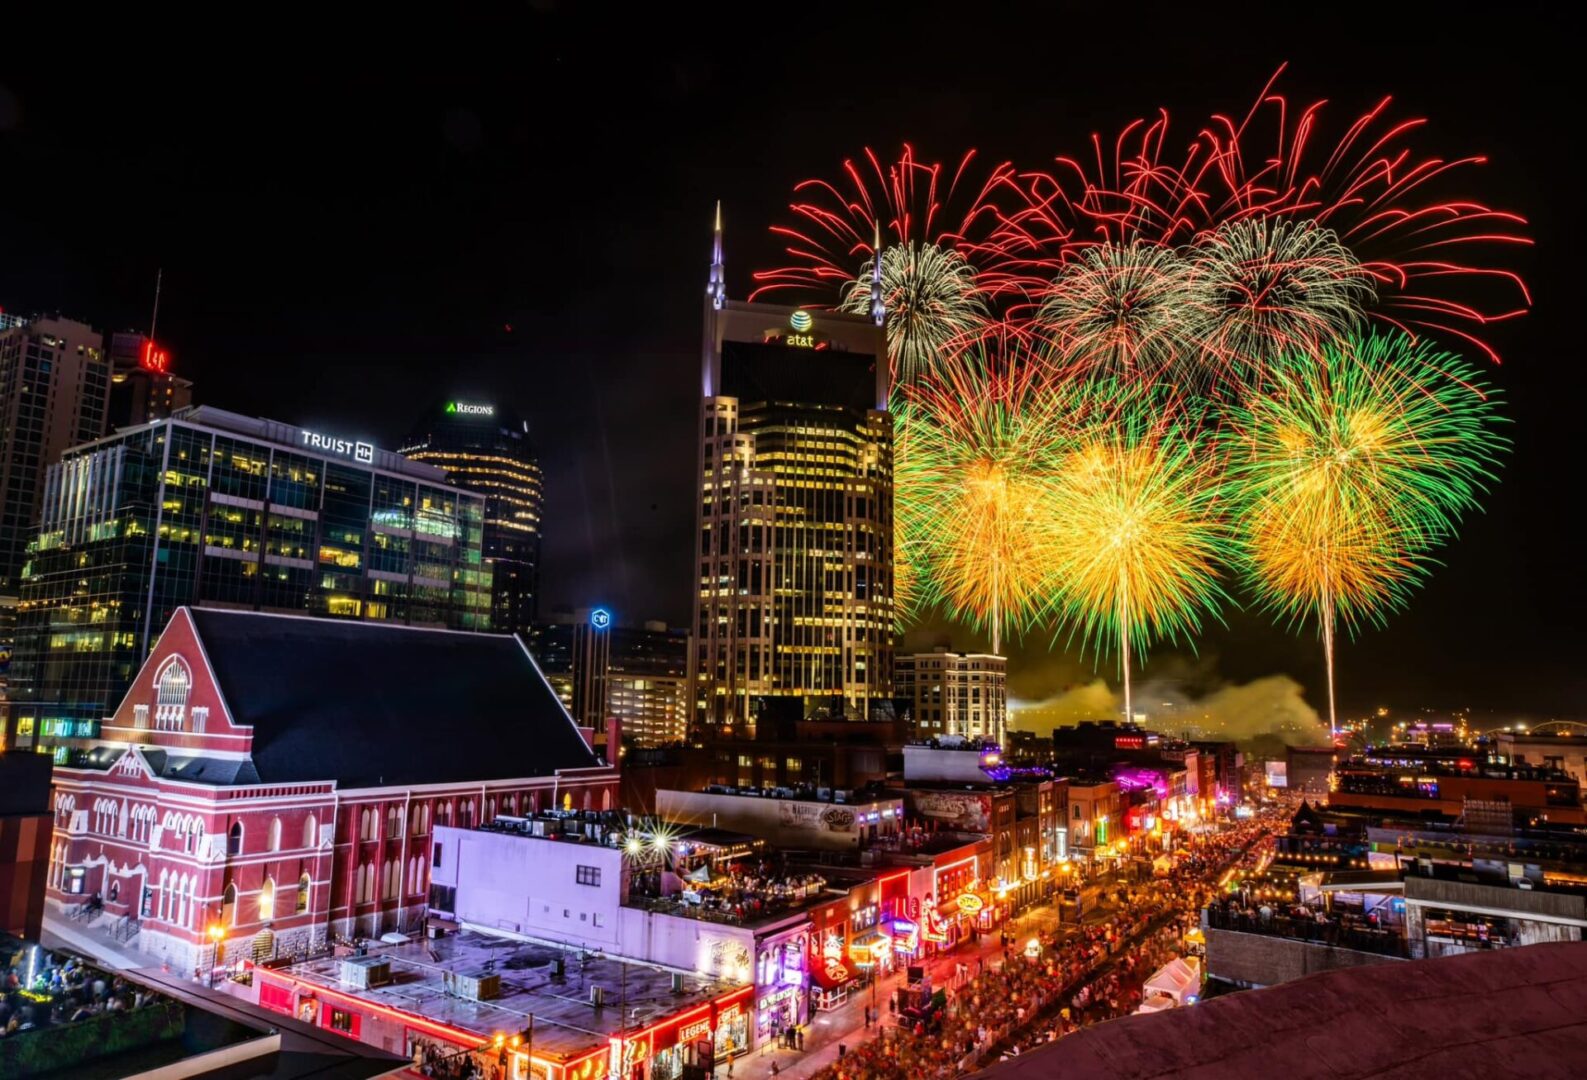 Nashvilles Fourth of July Celebration aerial view